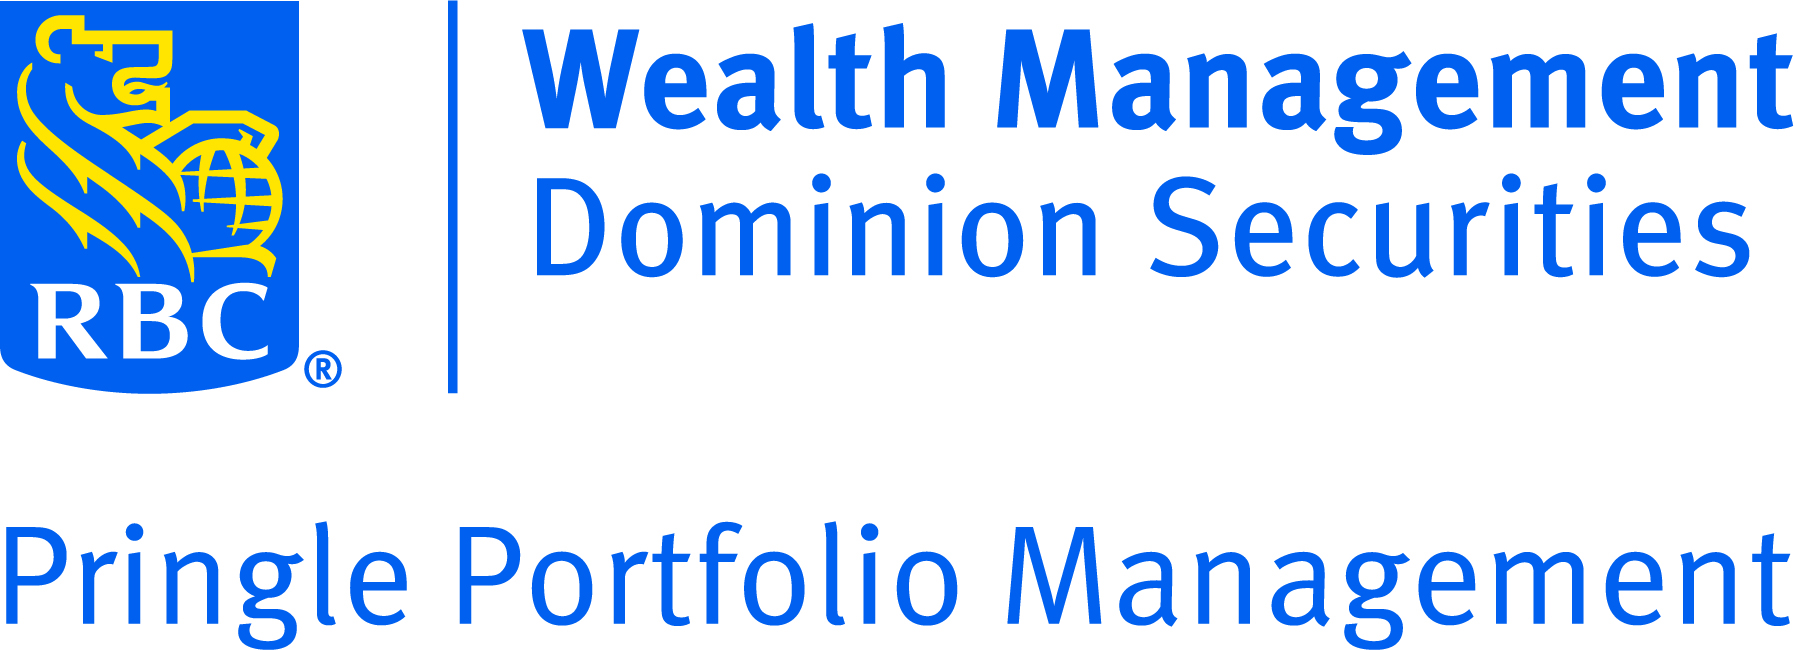 RBC Wealth Management Dominion Securities Pringle Portfolio Management